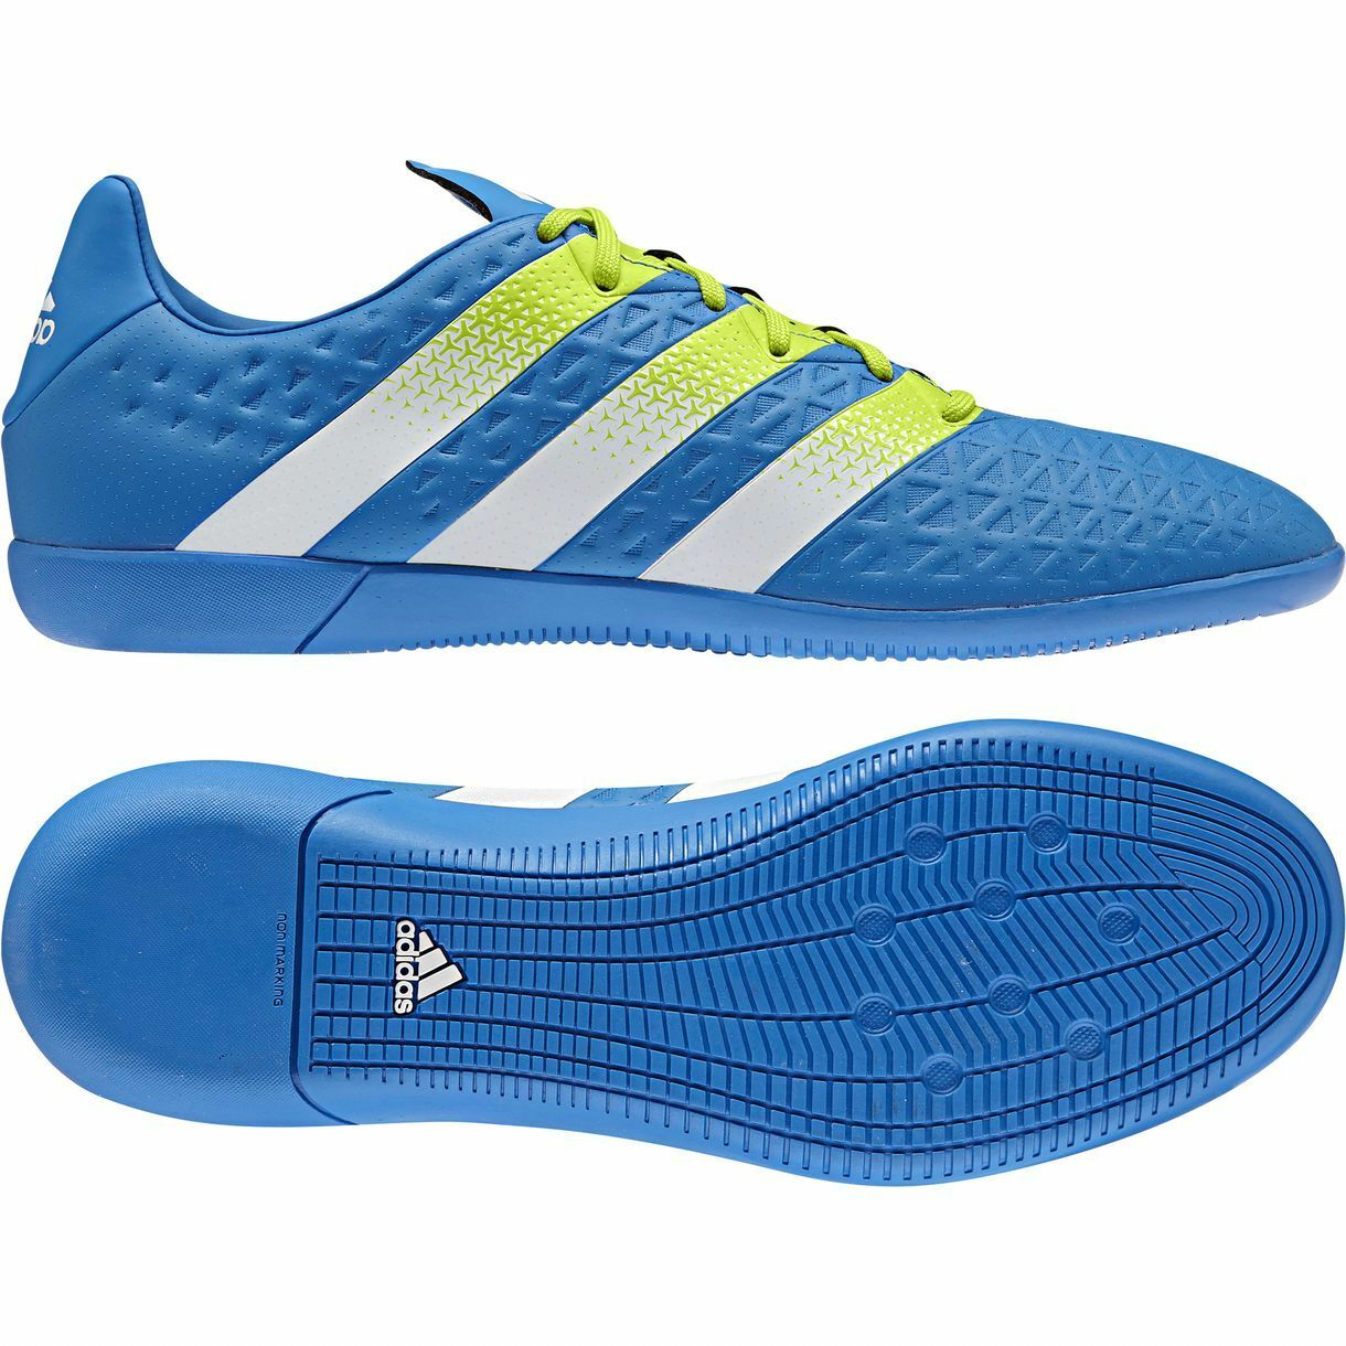 adidas ACE 16.3 Indoor Soccer Shoes | Shock Blue | Men's